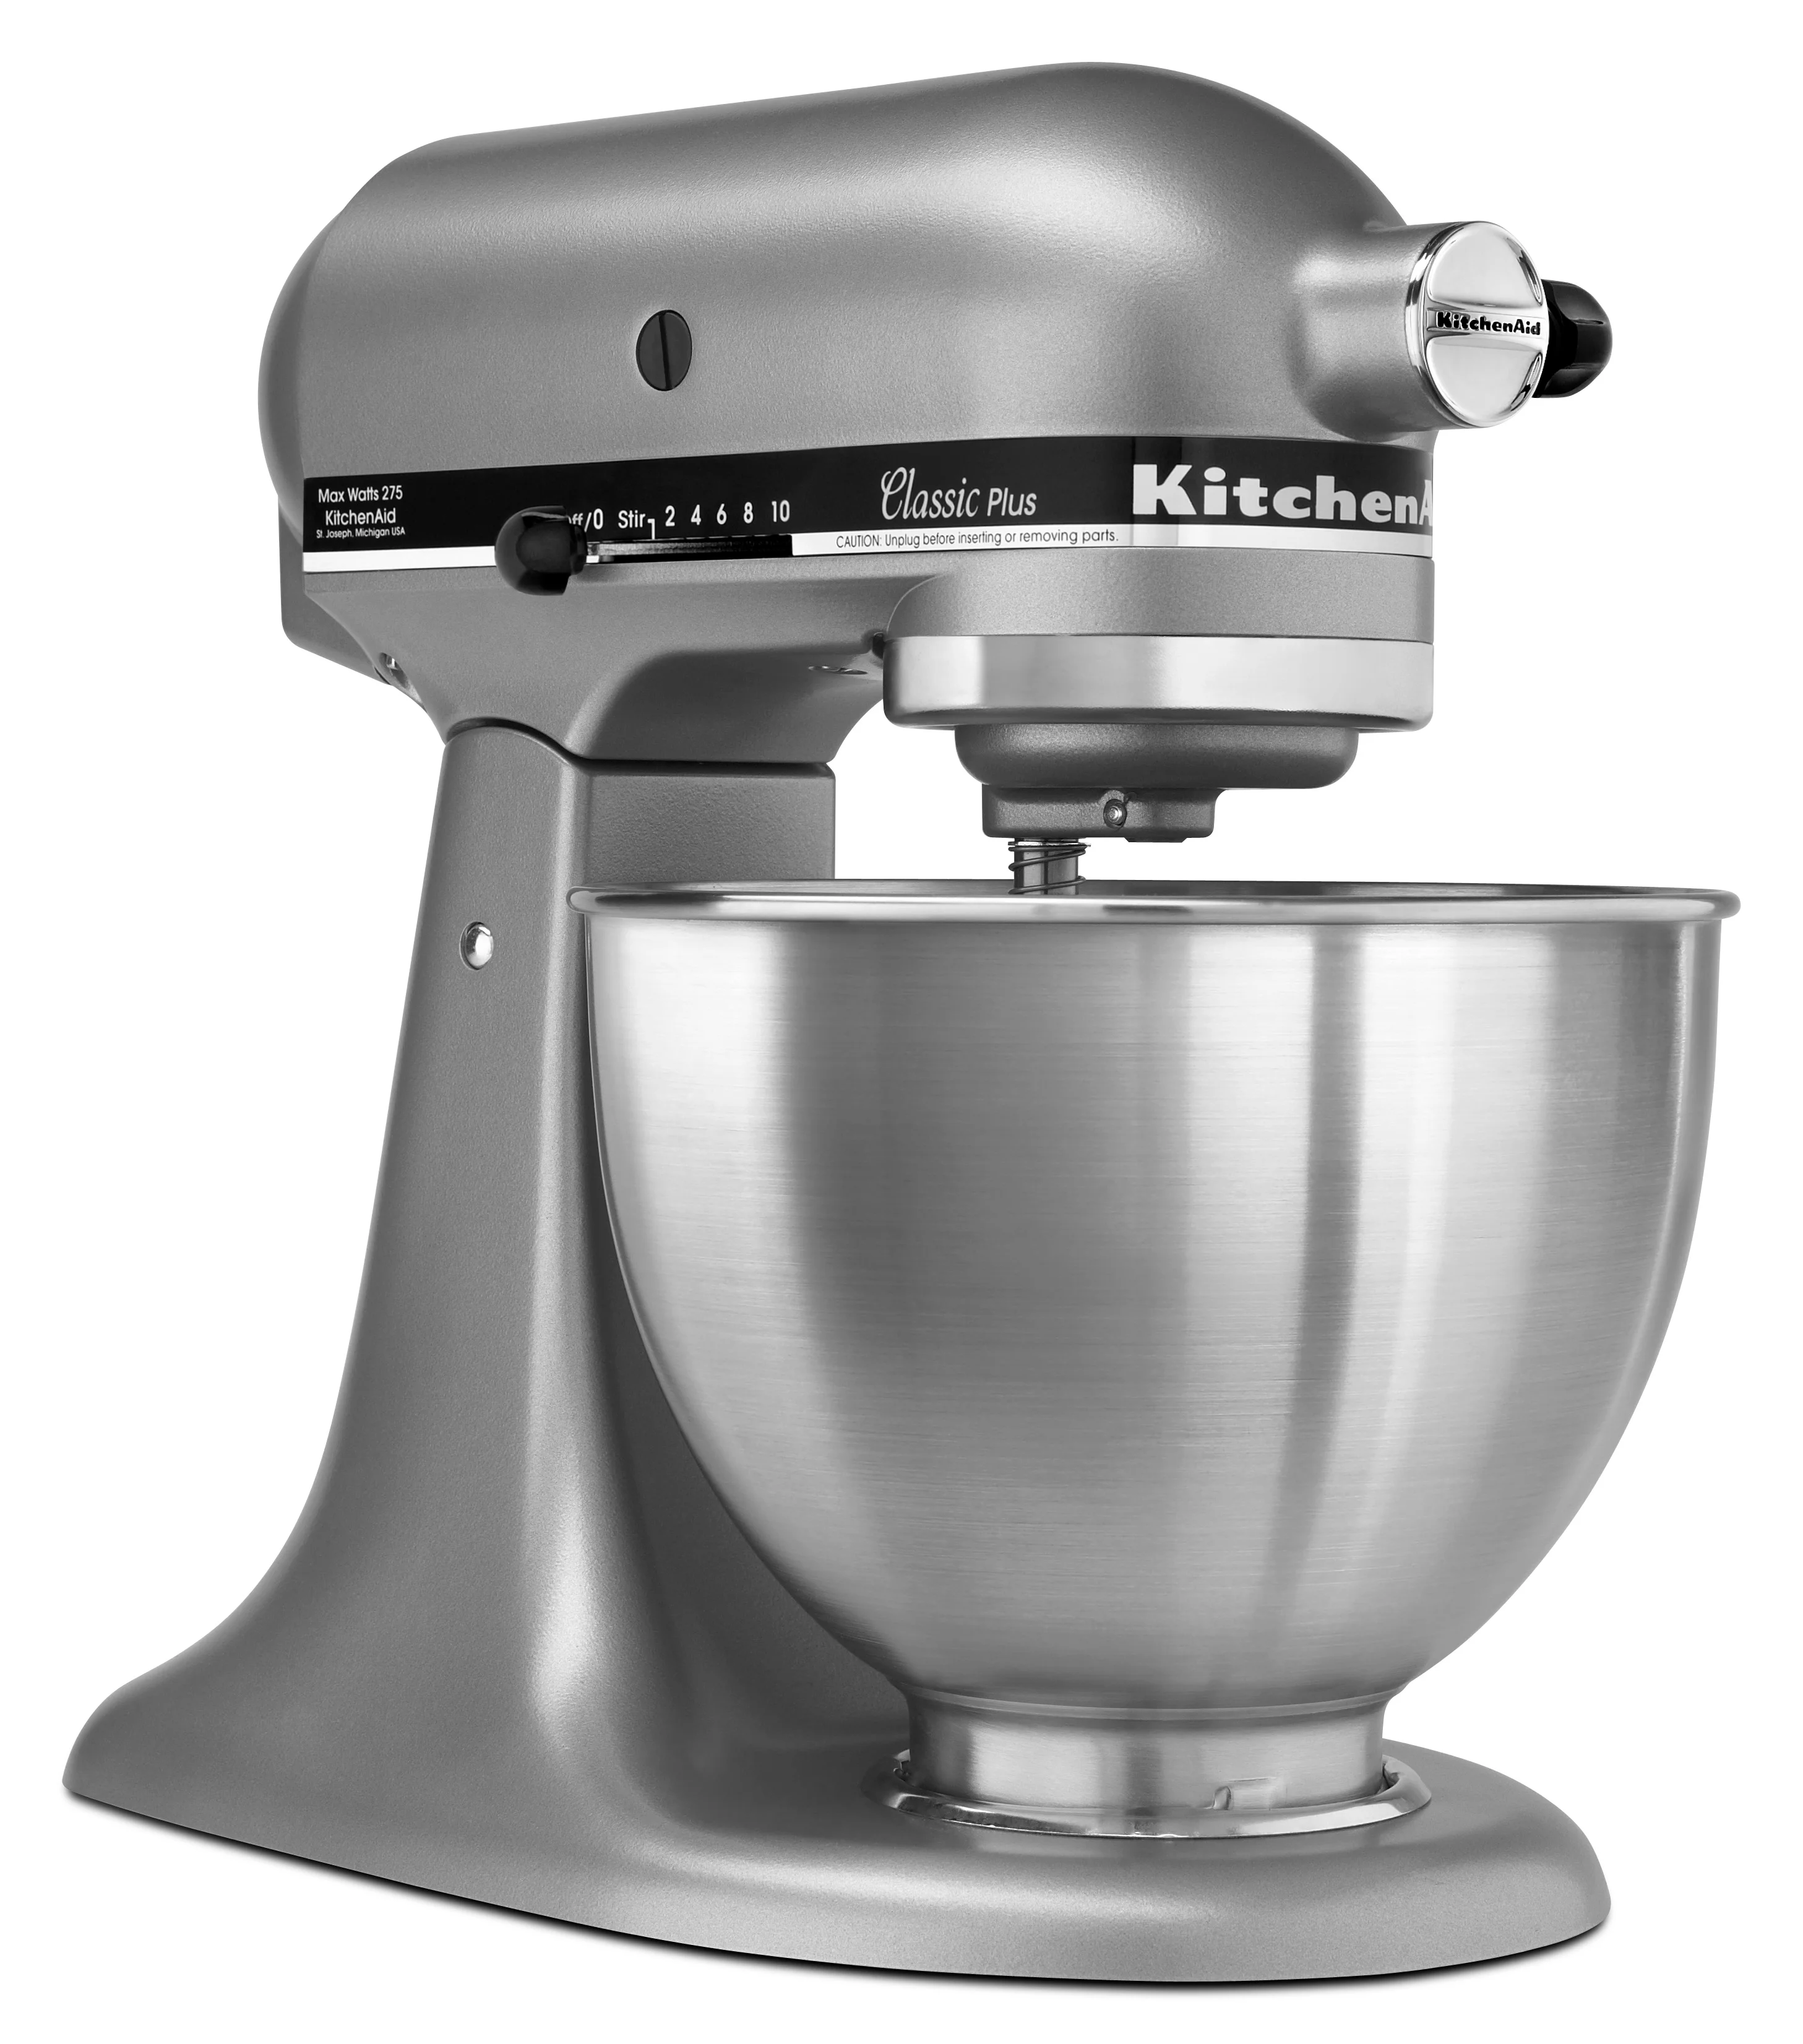 KitchenAid Classic Series 4.5 Quart Tilt-head Stand Mixer White with bowls